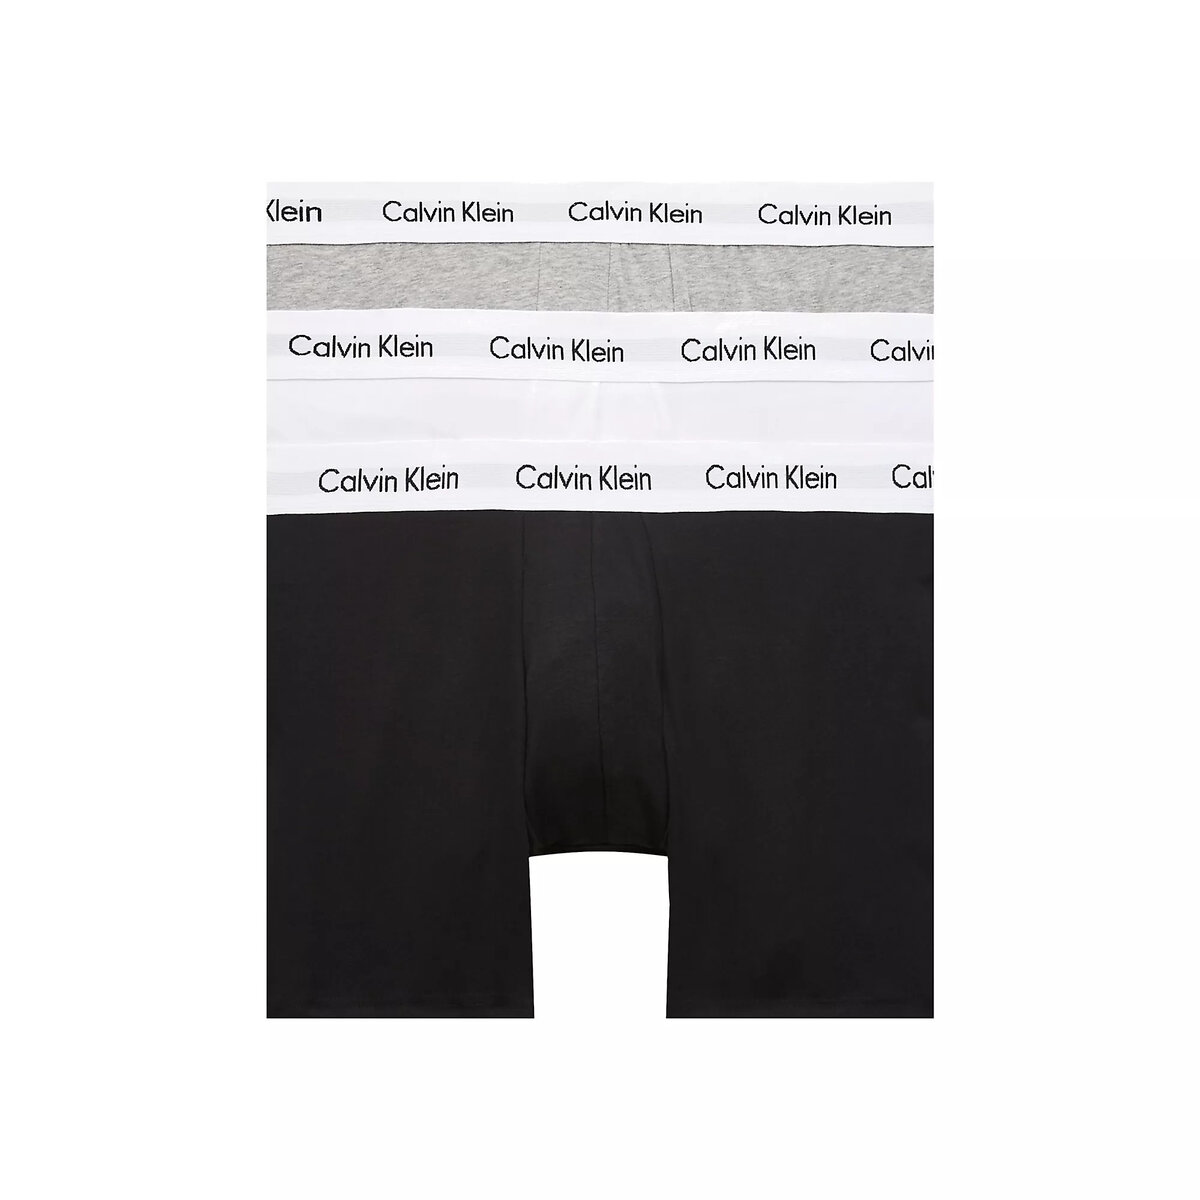 Mužské boxerky Calvin Klein (3 ks), L i652_000NB1770AMP1003